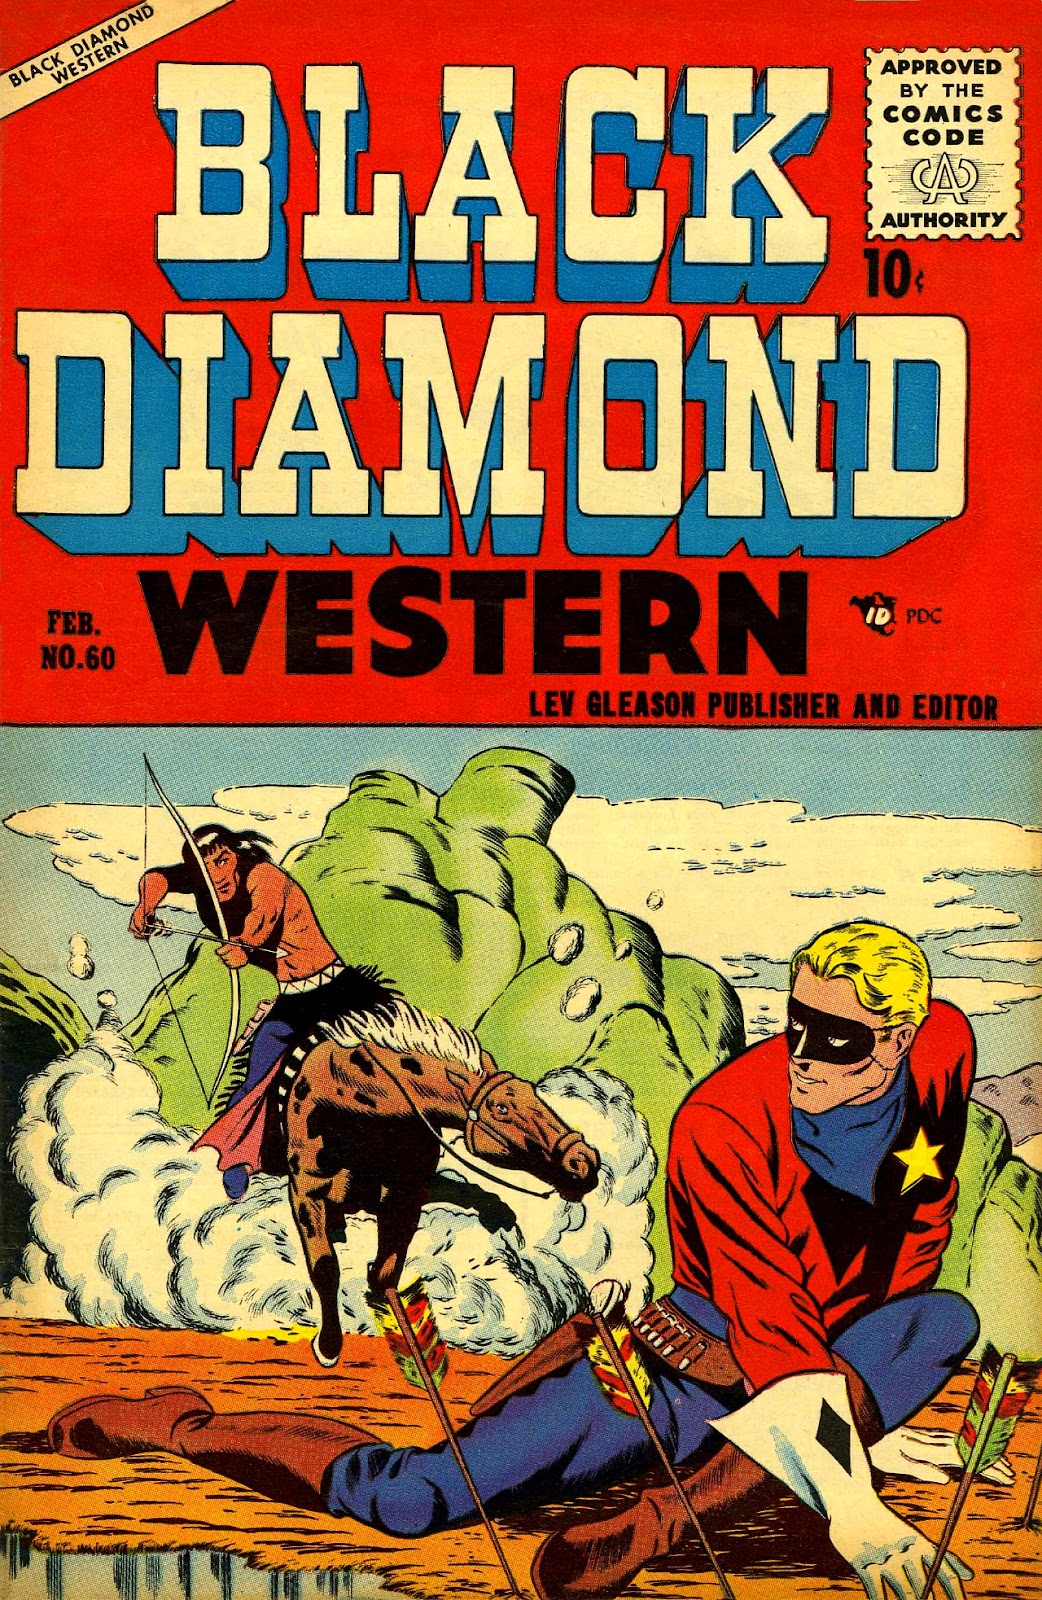 Black Diamond Western issue 60 - Page 1